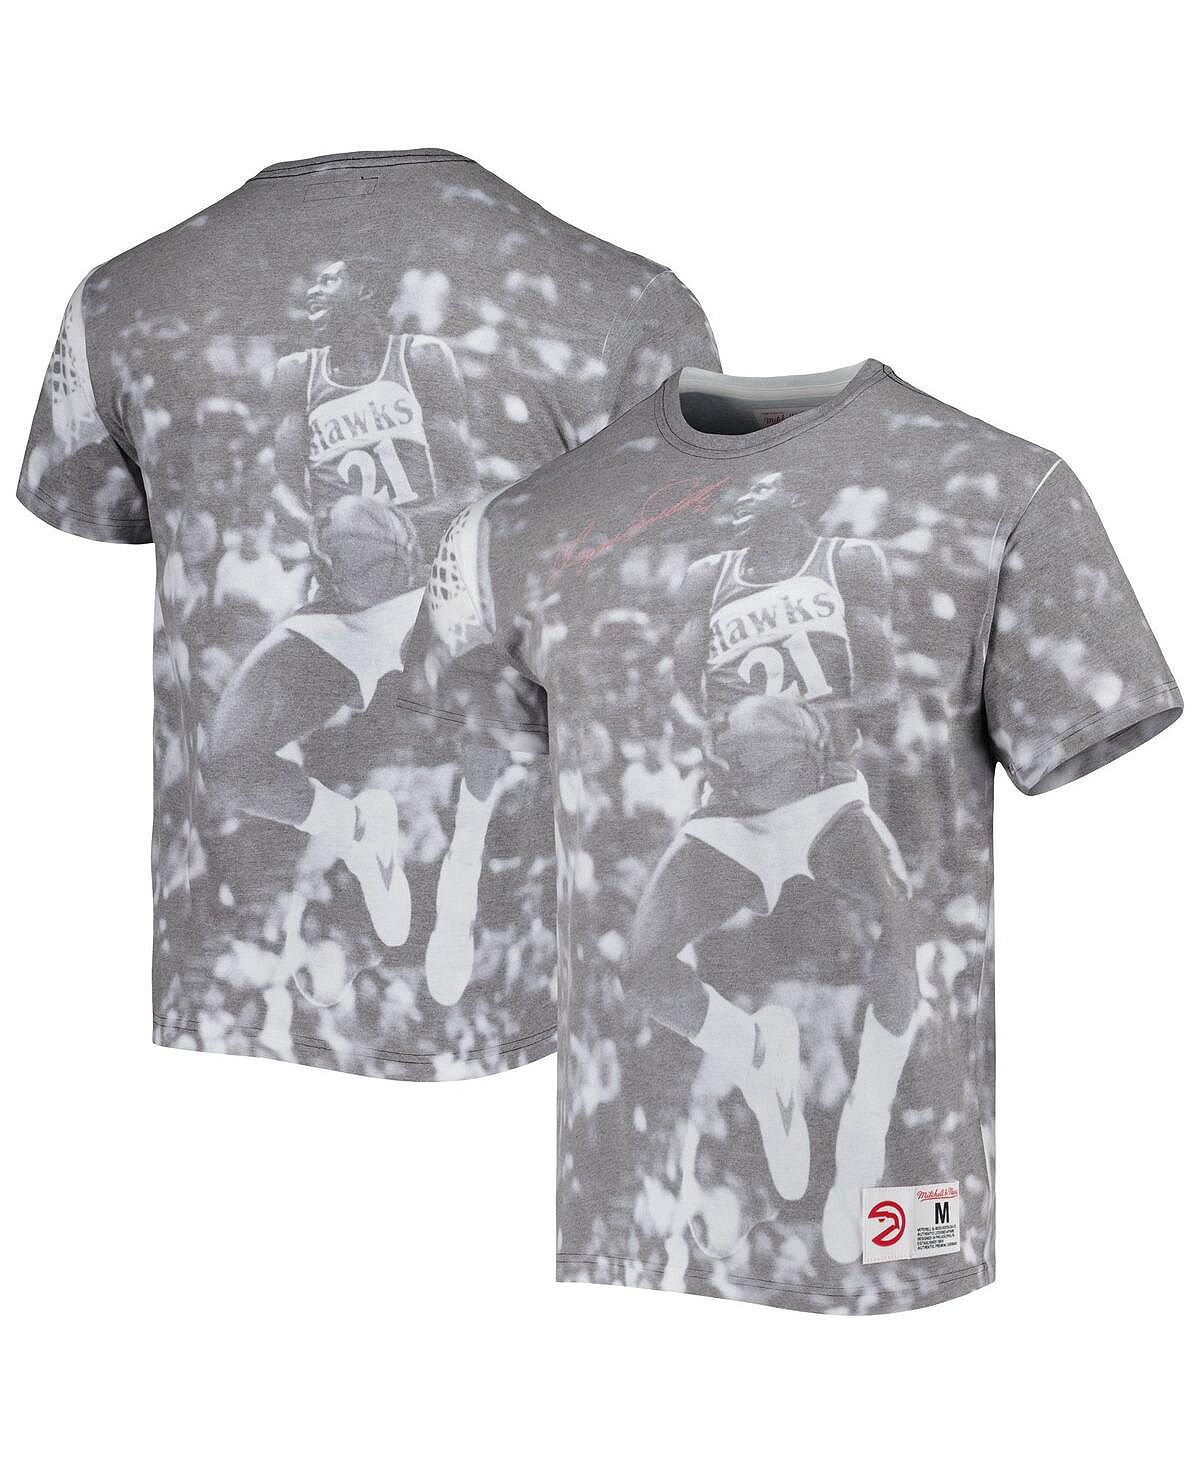 Мужская футболка dominique wilkins grey atlanta hawks above the rim с сублимацией Mitchell & Ness, серый